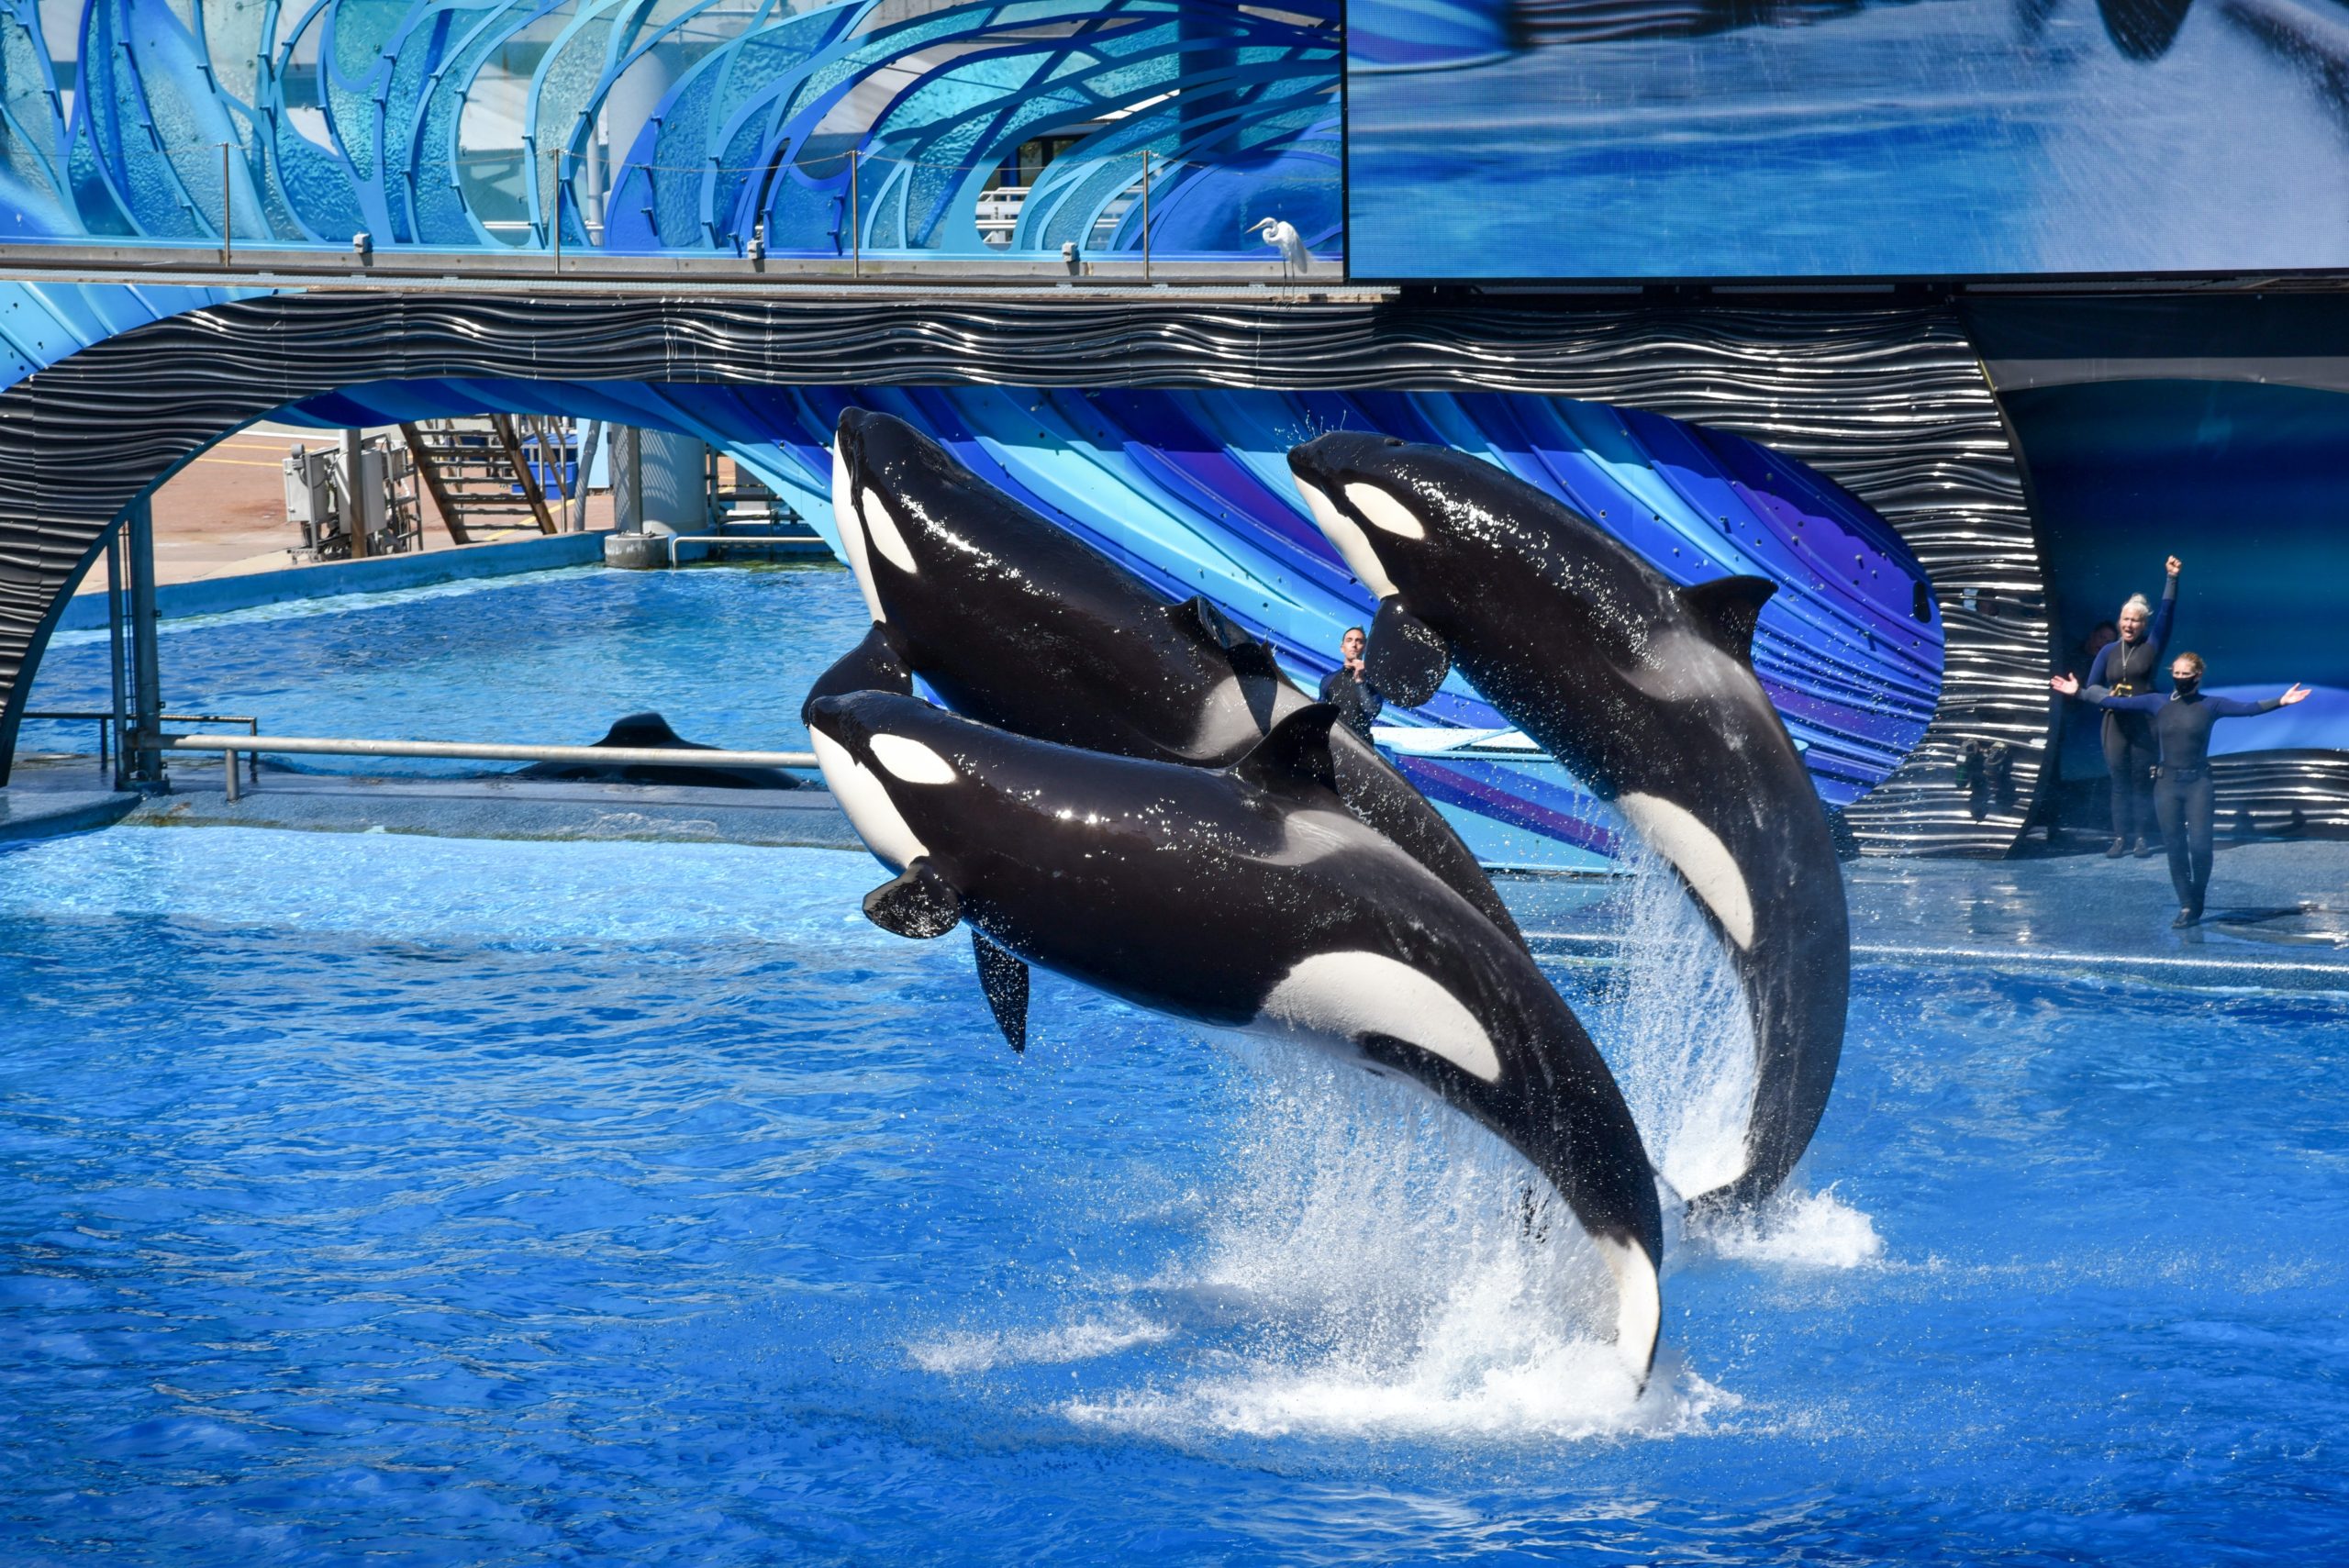 https://orcaspirit.com/wordpress/wp-content/uploads/2018/03/orcas-in-captivity-scaled-1.jpeg